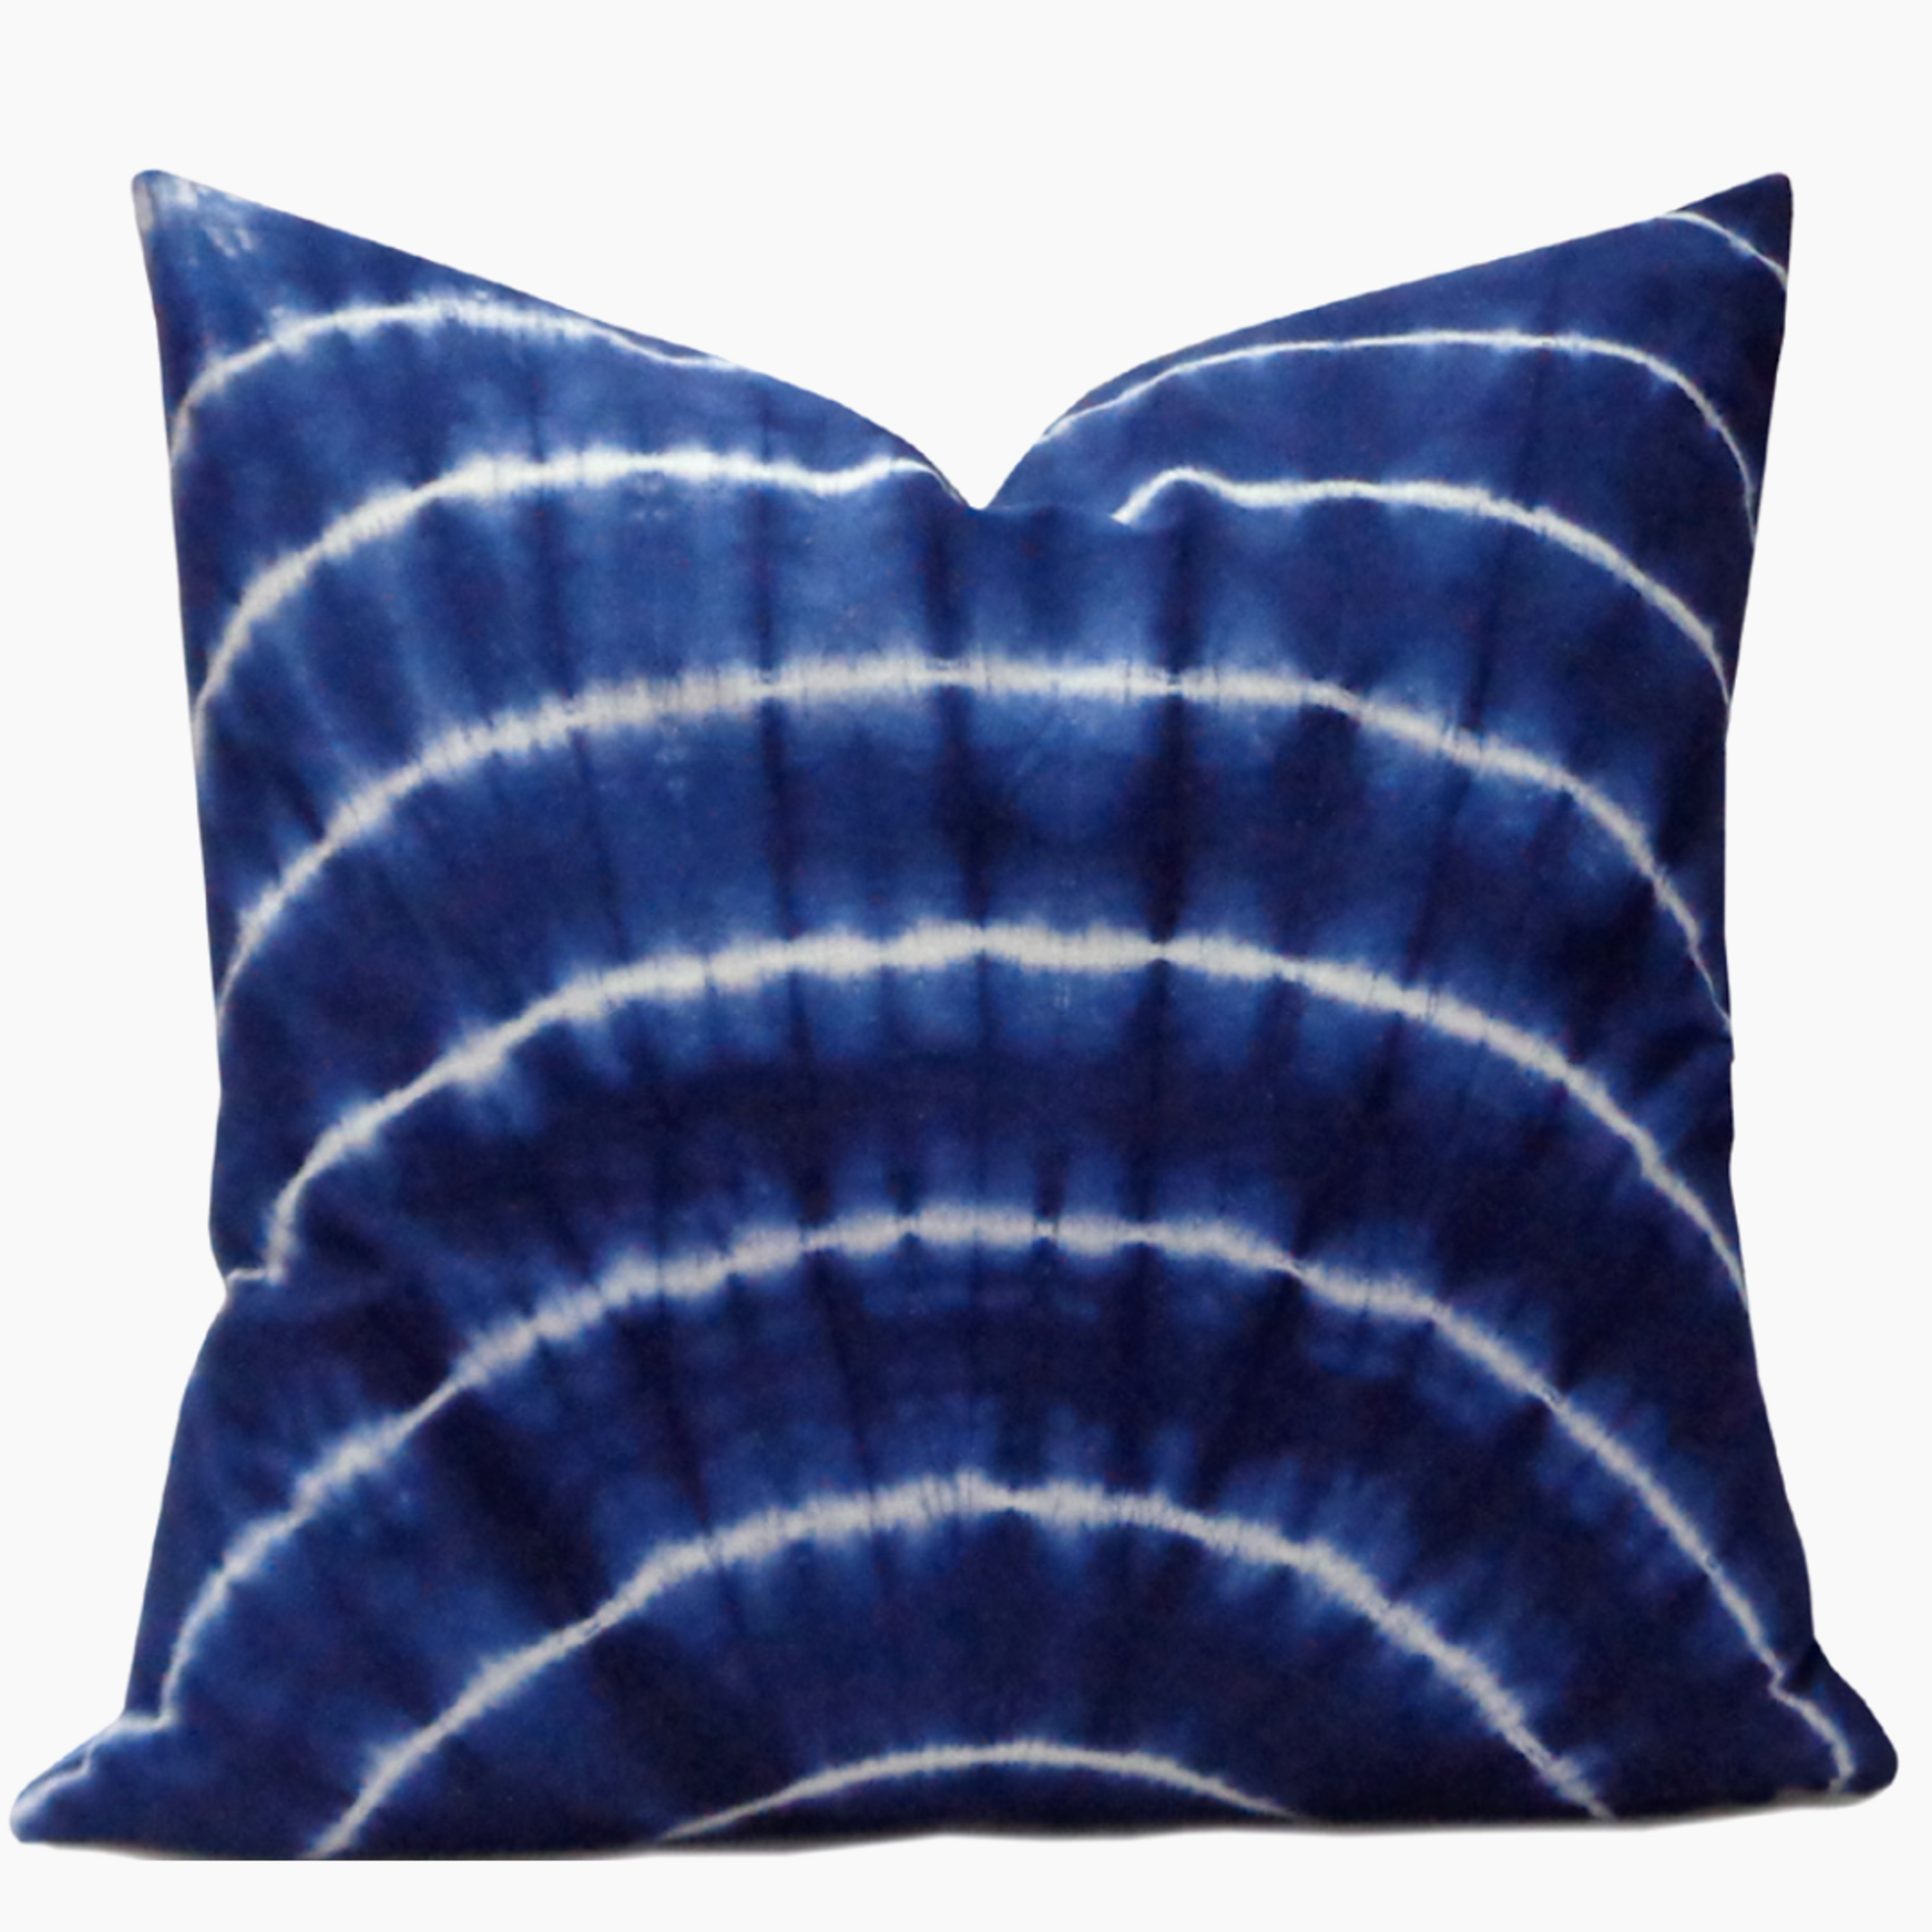 Horizon Tie Dye Pillow Cover (Set of 2)